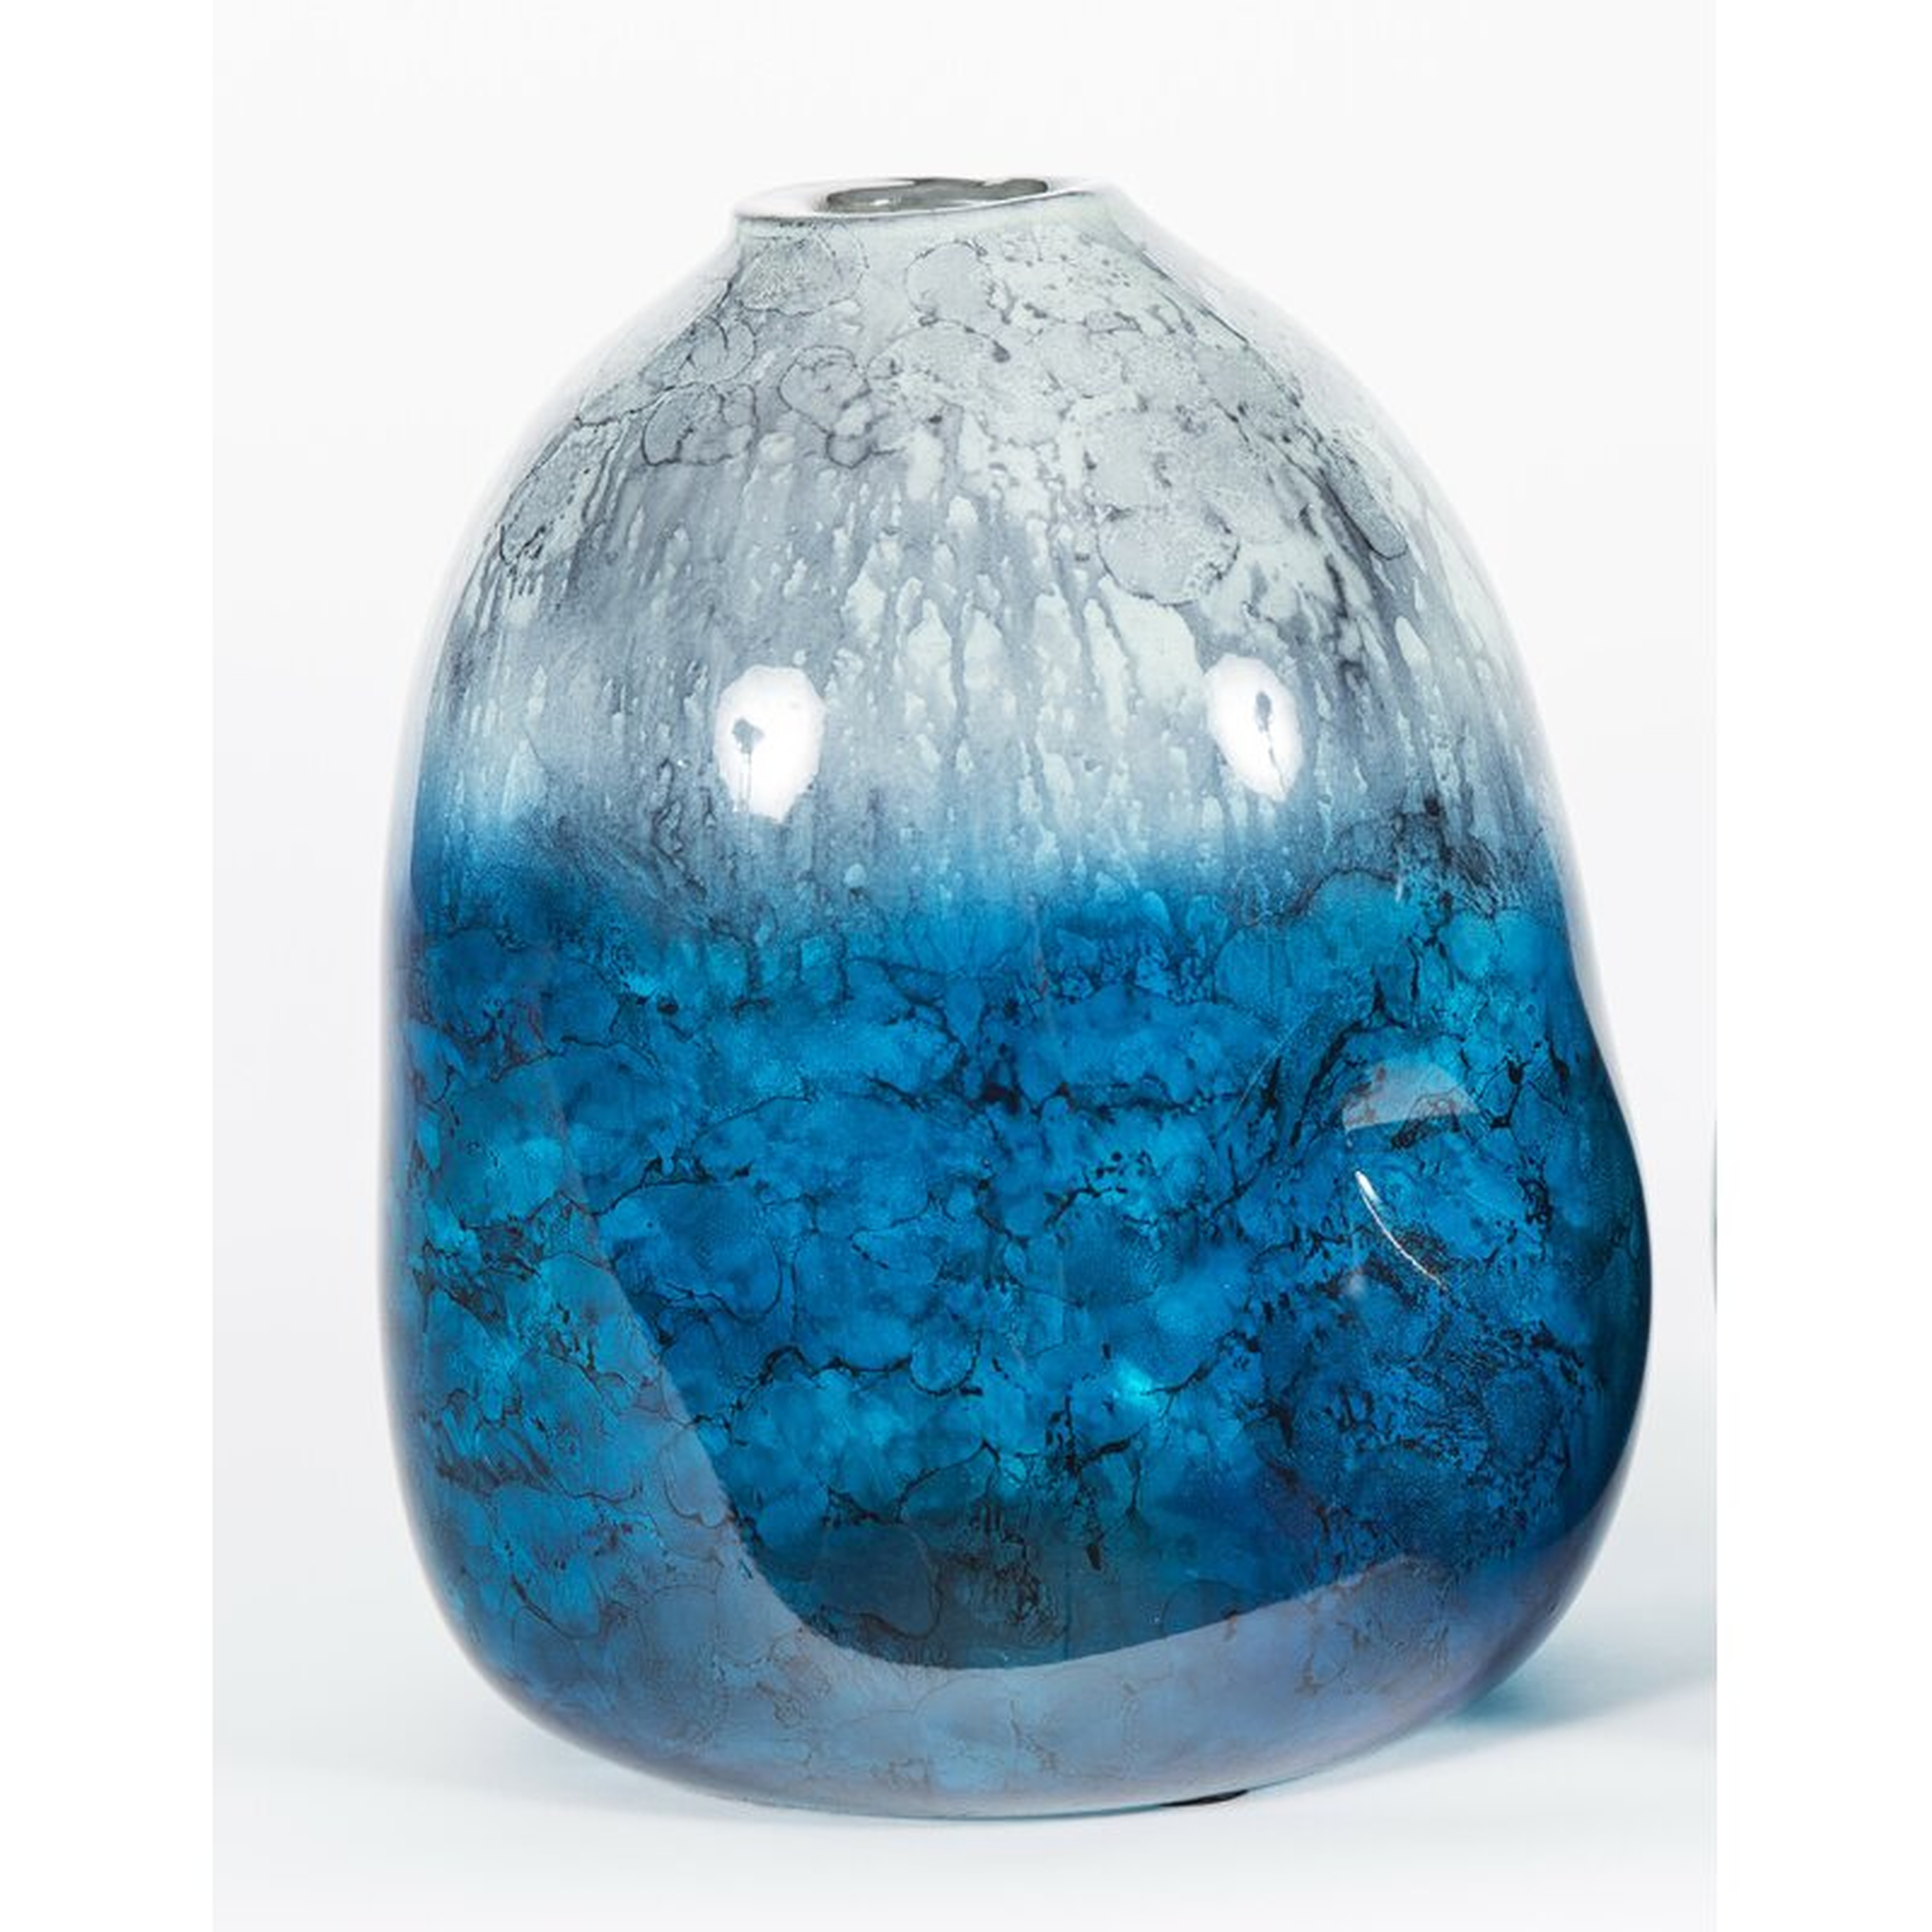 Prima Design Source Rock Table Vase Size: 12" H x 8" W x 8" D - Perigold